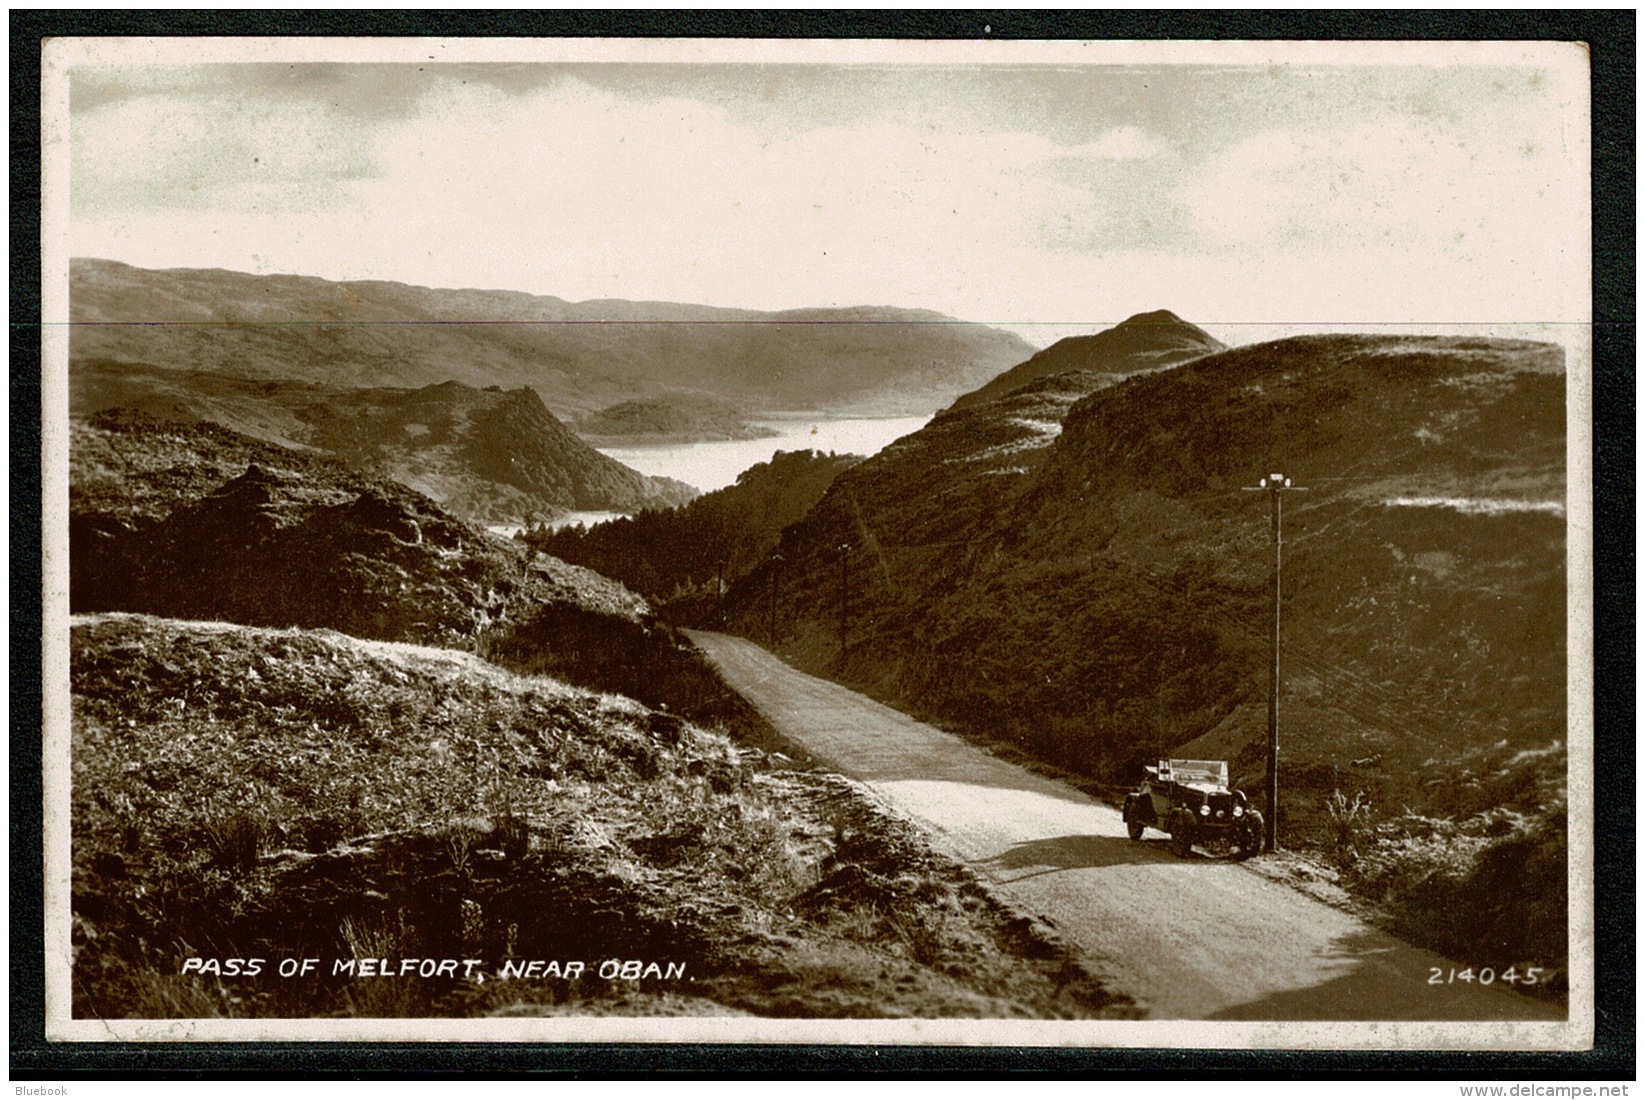 RB 1179 - Real Photo Postcard - Car On Road - Pass Of Melfort Oban - Argyllshire Scotland - Argyllshire